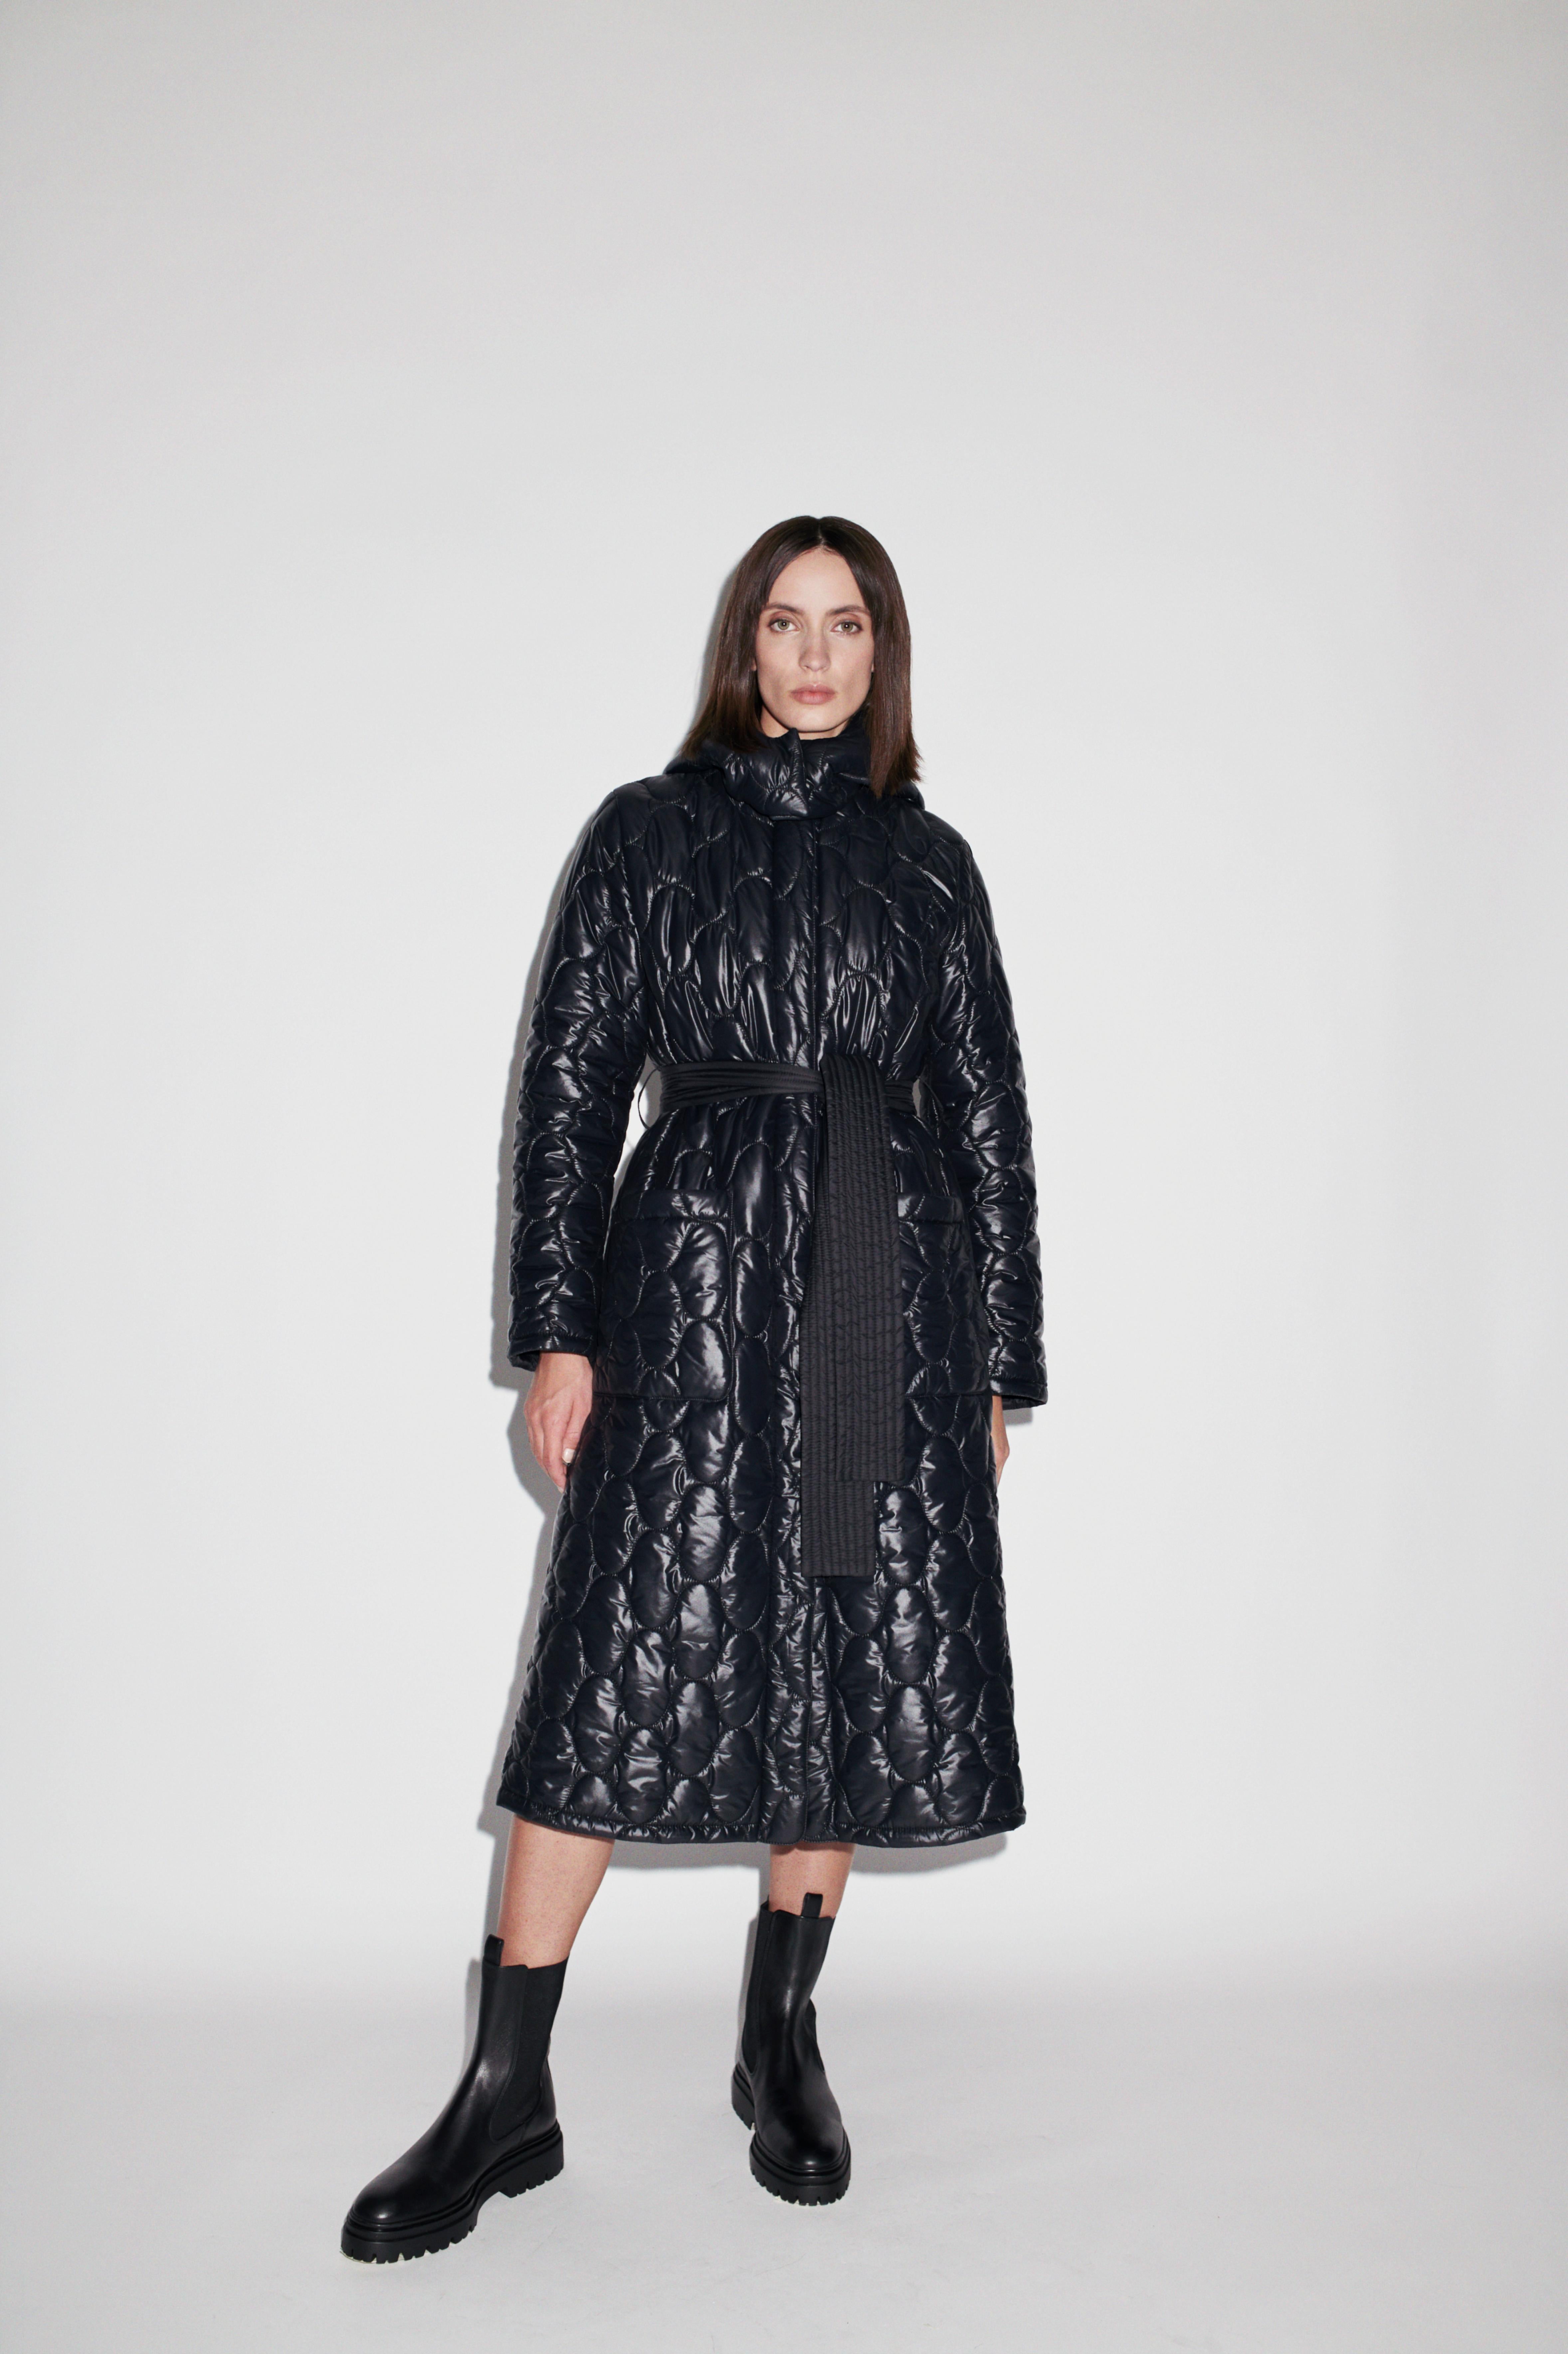 Verheyen London Aurora Quilted Coat with detachable hood - Size uk 10  For Sale 3